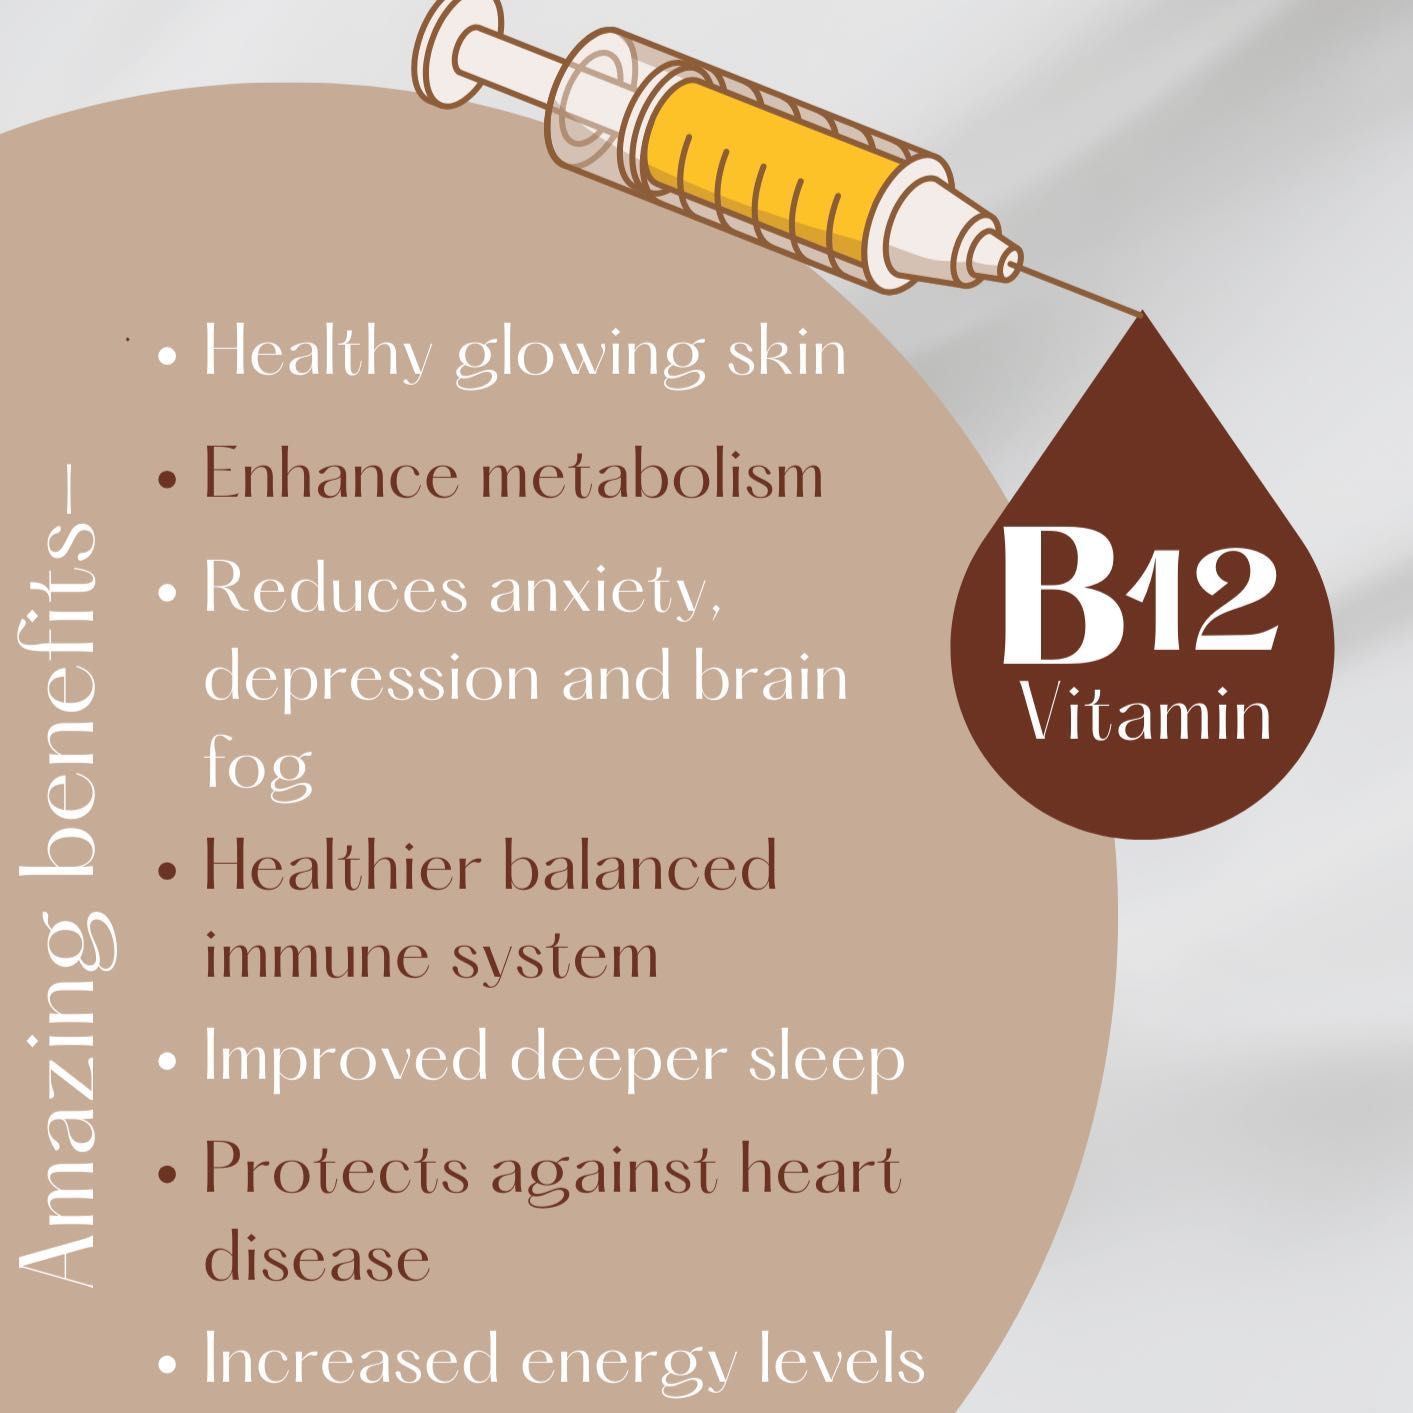 Vitamin B12 (12 month course) portfolio